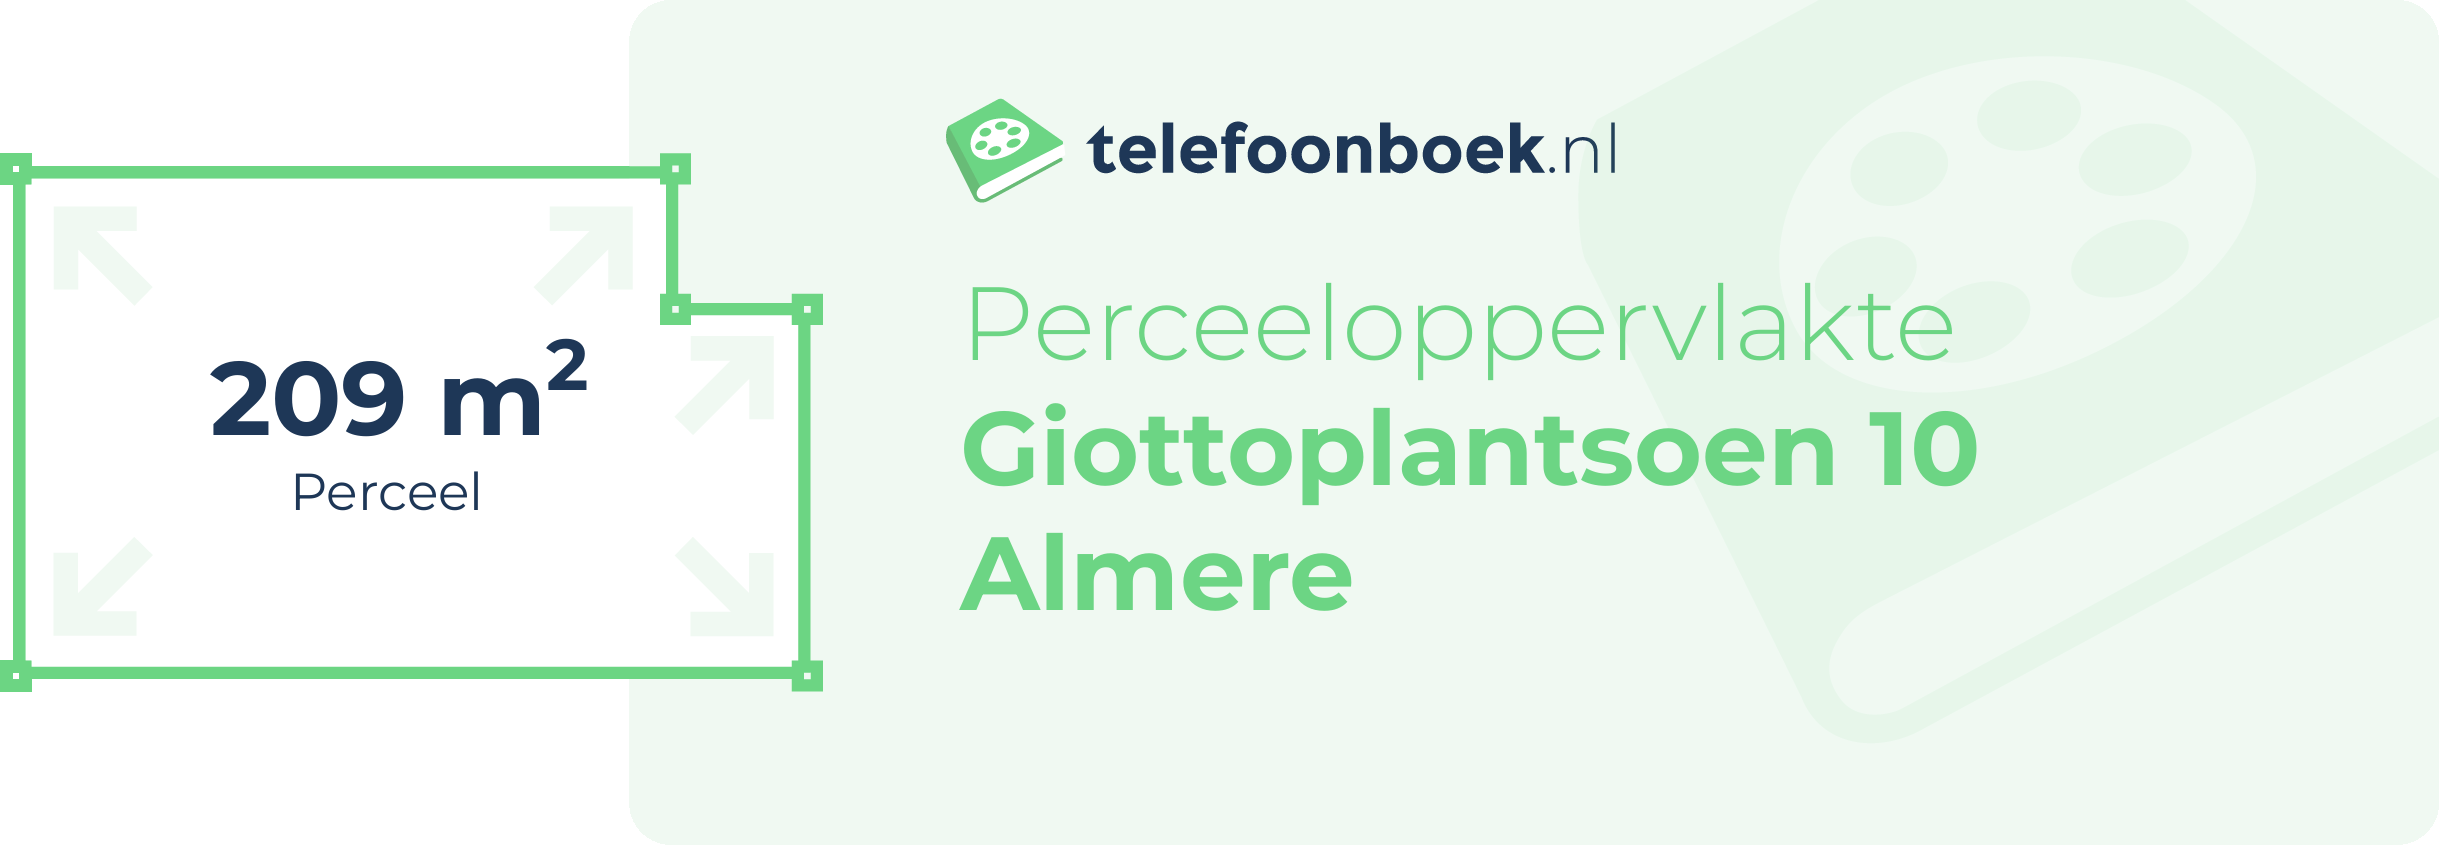 Perceeloppervlakte Giottoplantsoen 10 Almere